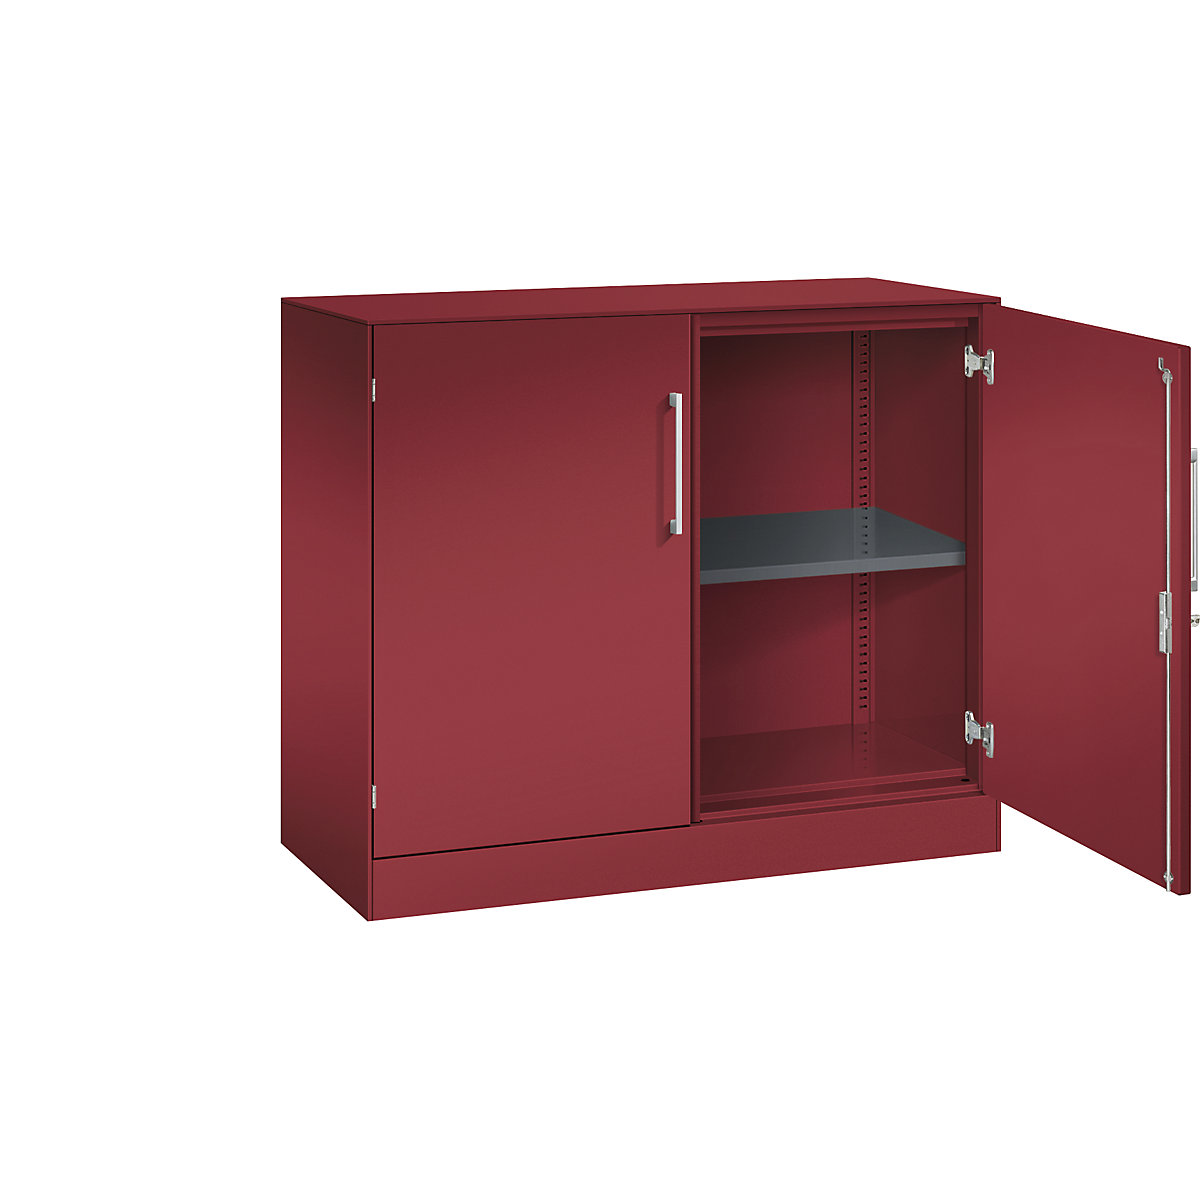 ASISTO double door cupboard, height 897 mm – C+P, width 1000 mm, 1 shelf, ruby red/ruby red-7